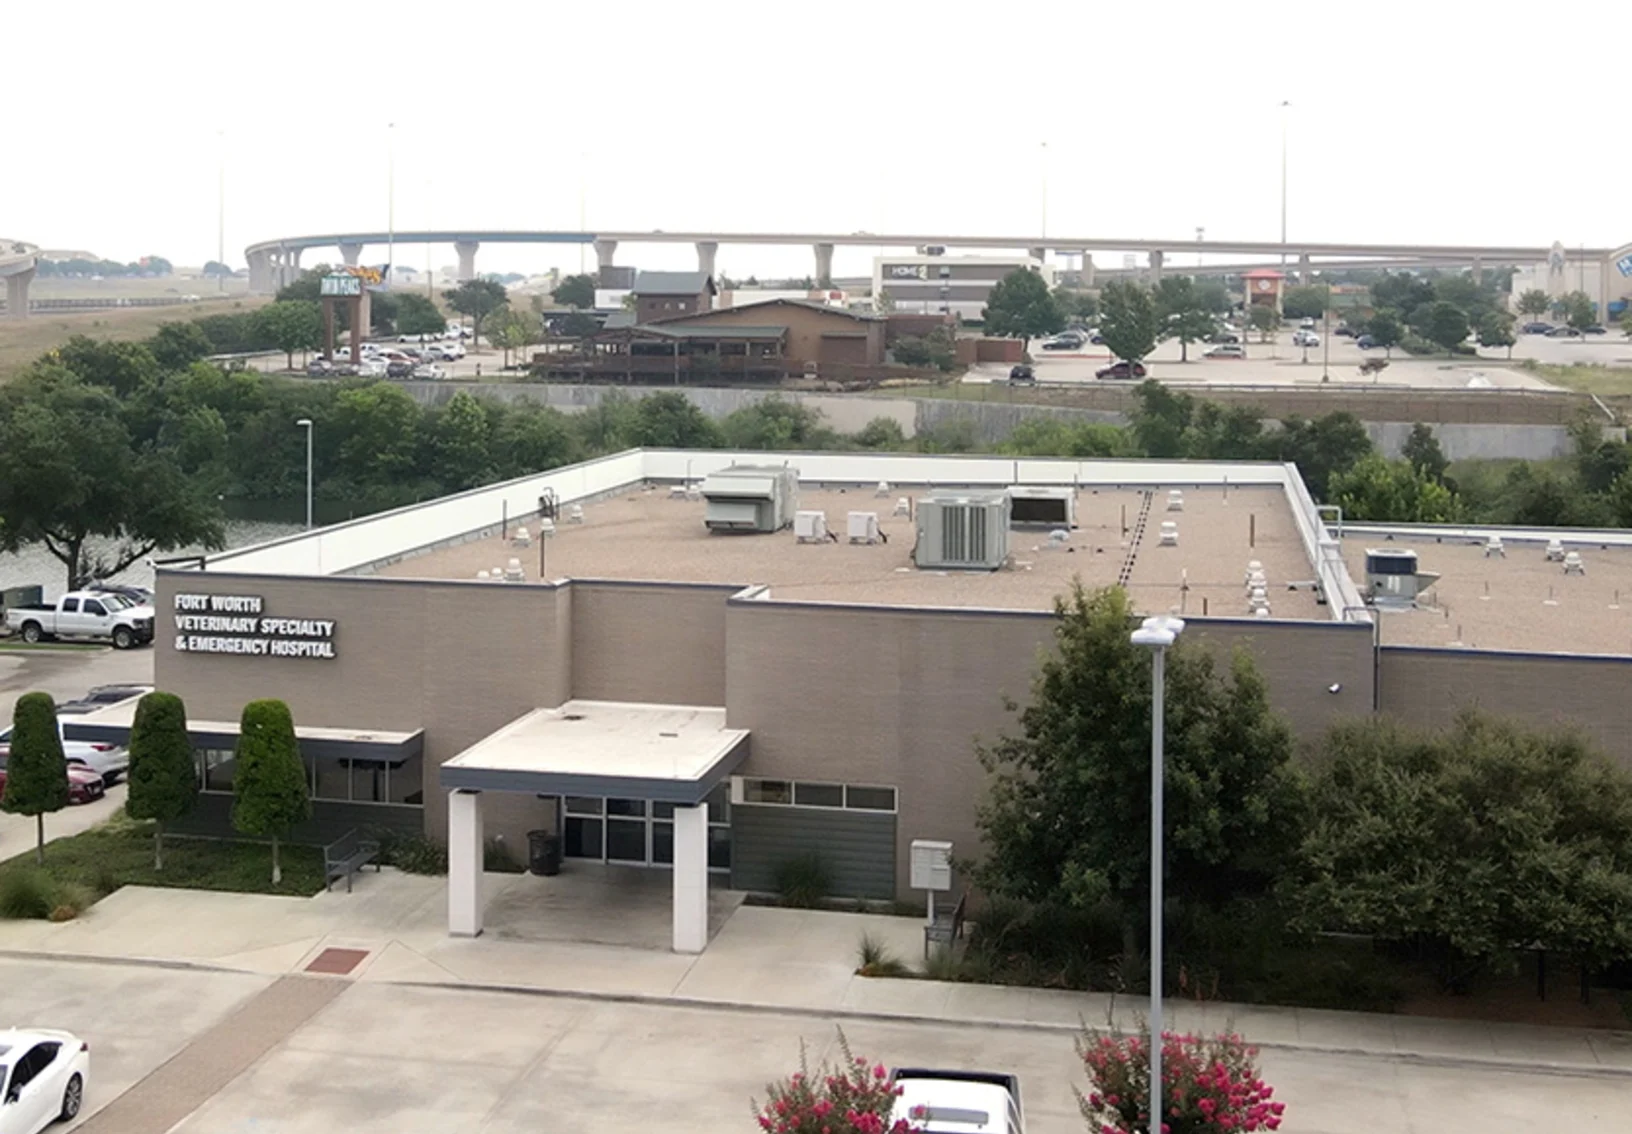 Exterior view of North Dallas location